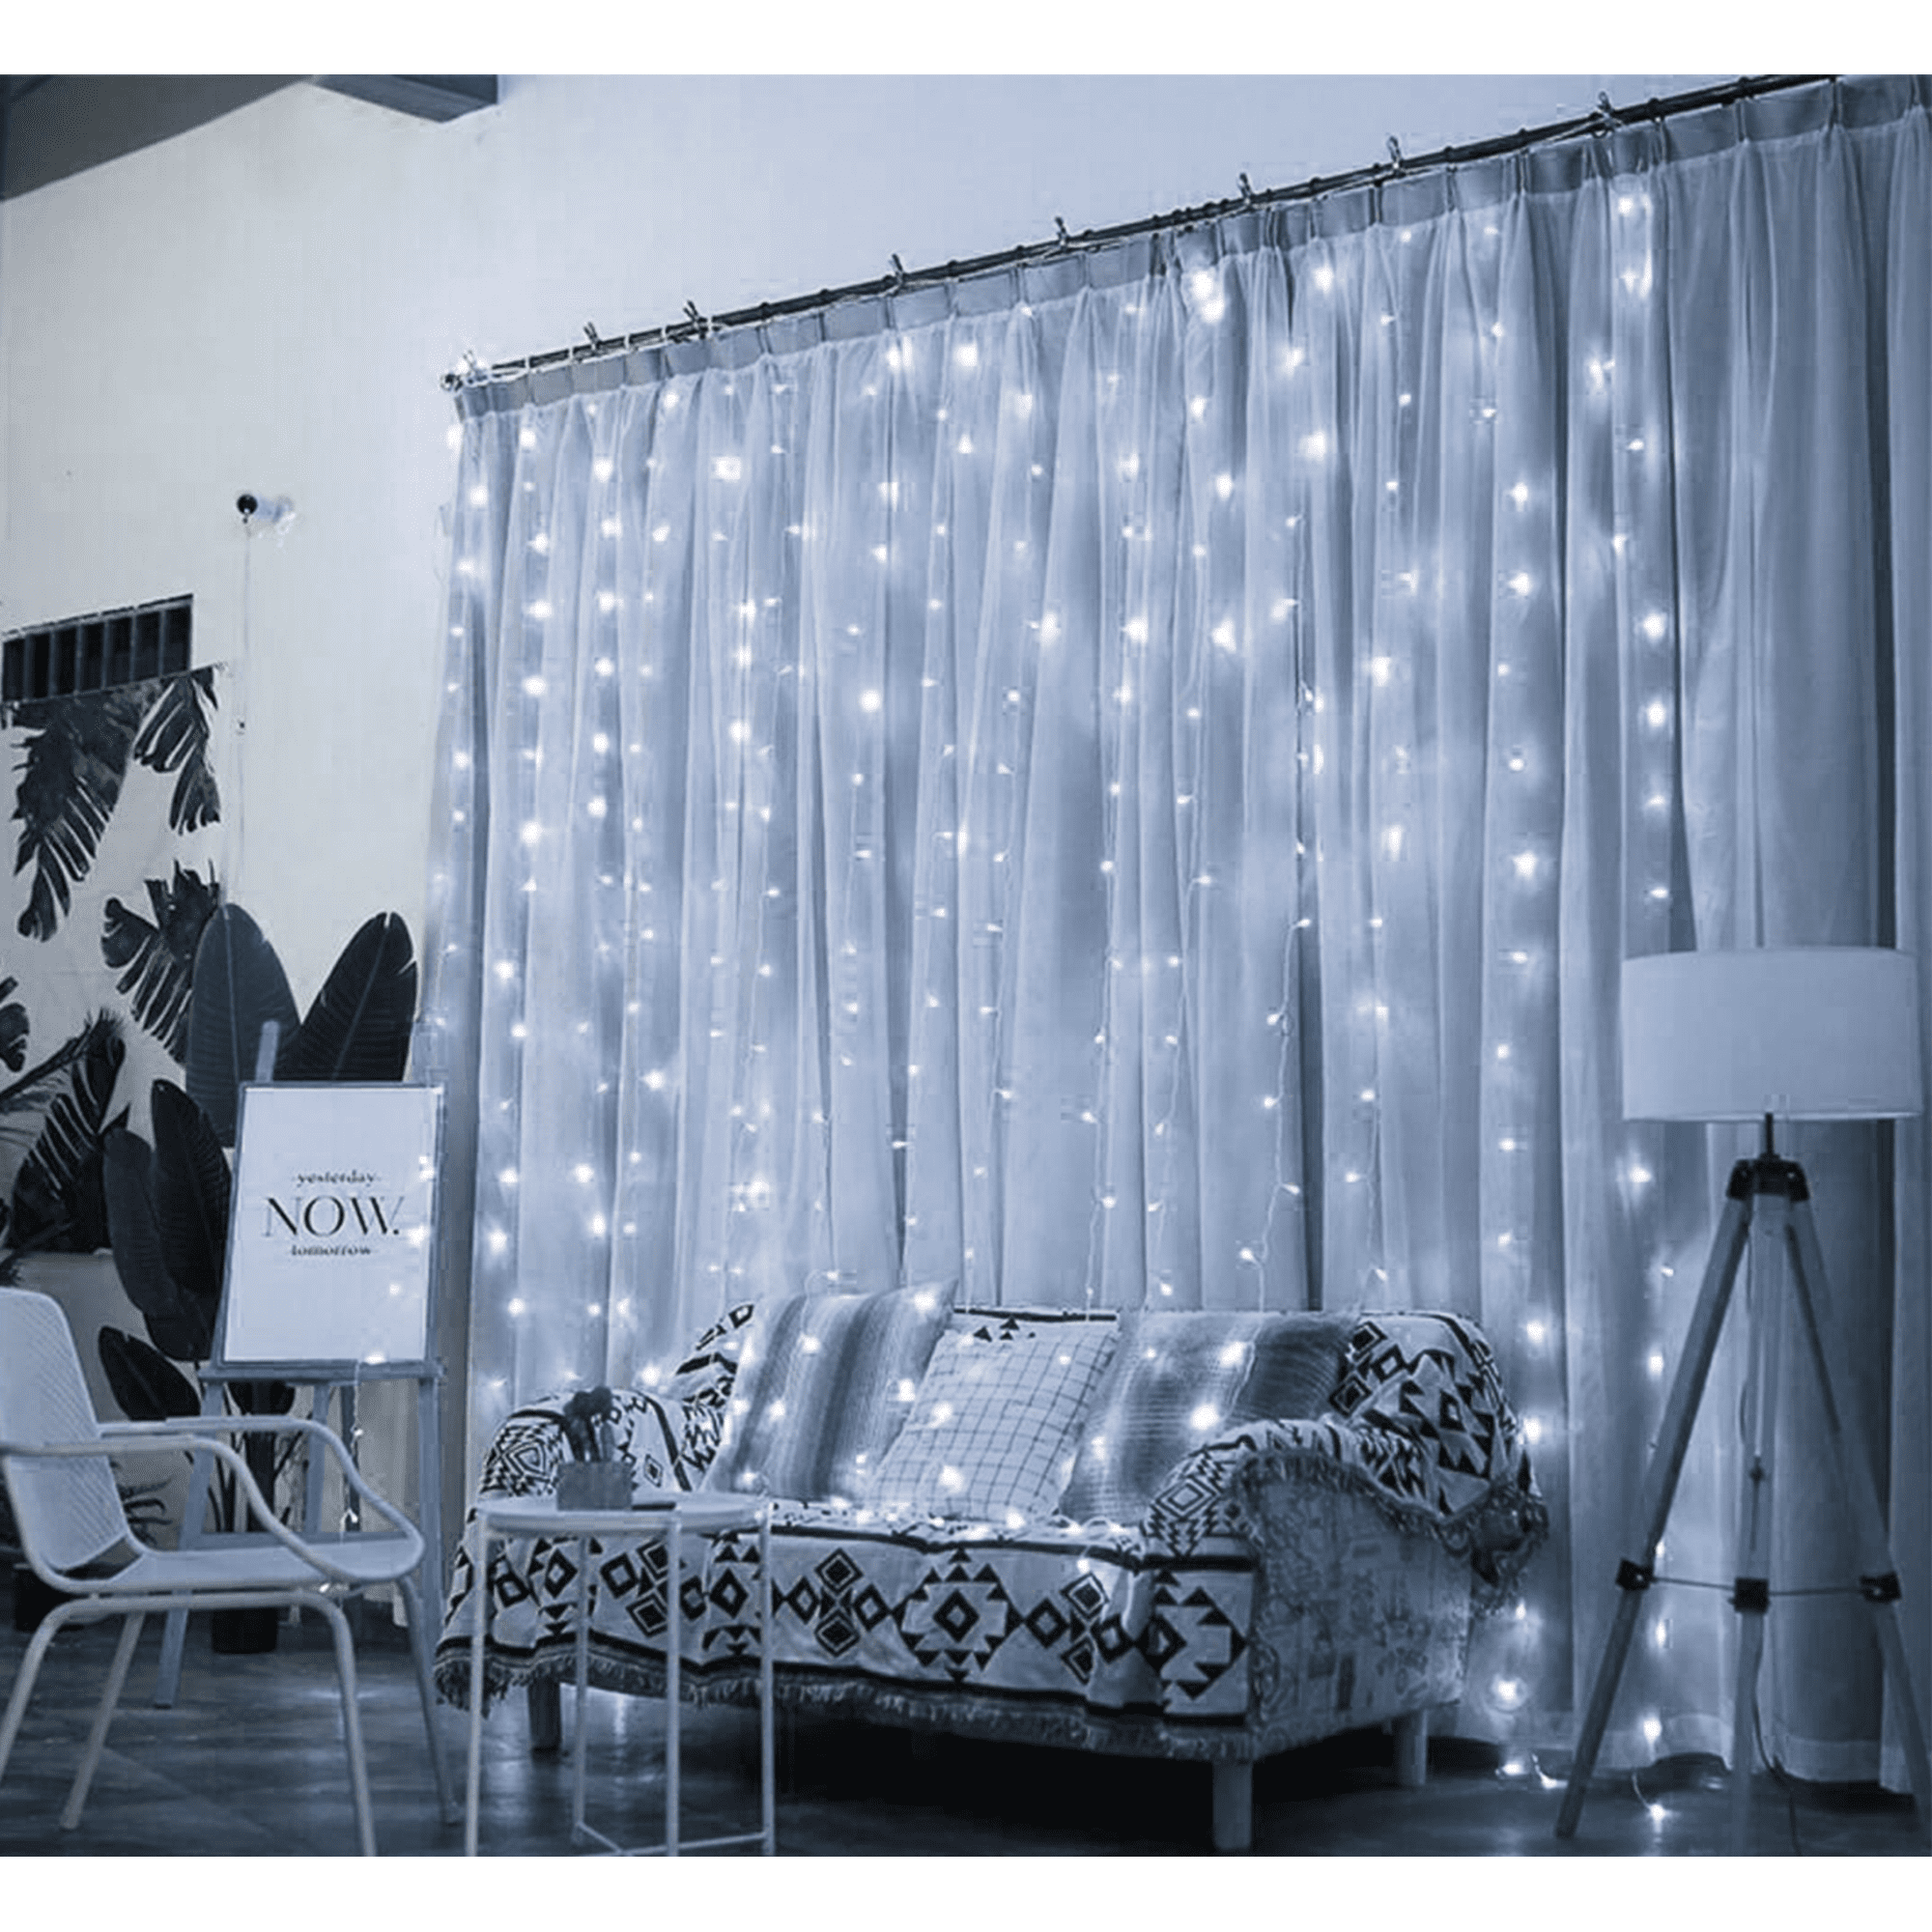 12 Stars Wedding Xmas Decor 2/4M LED String Fairy Lights Curtain Net Wall Lamp 